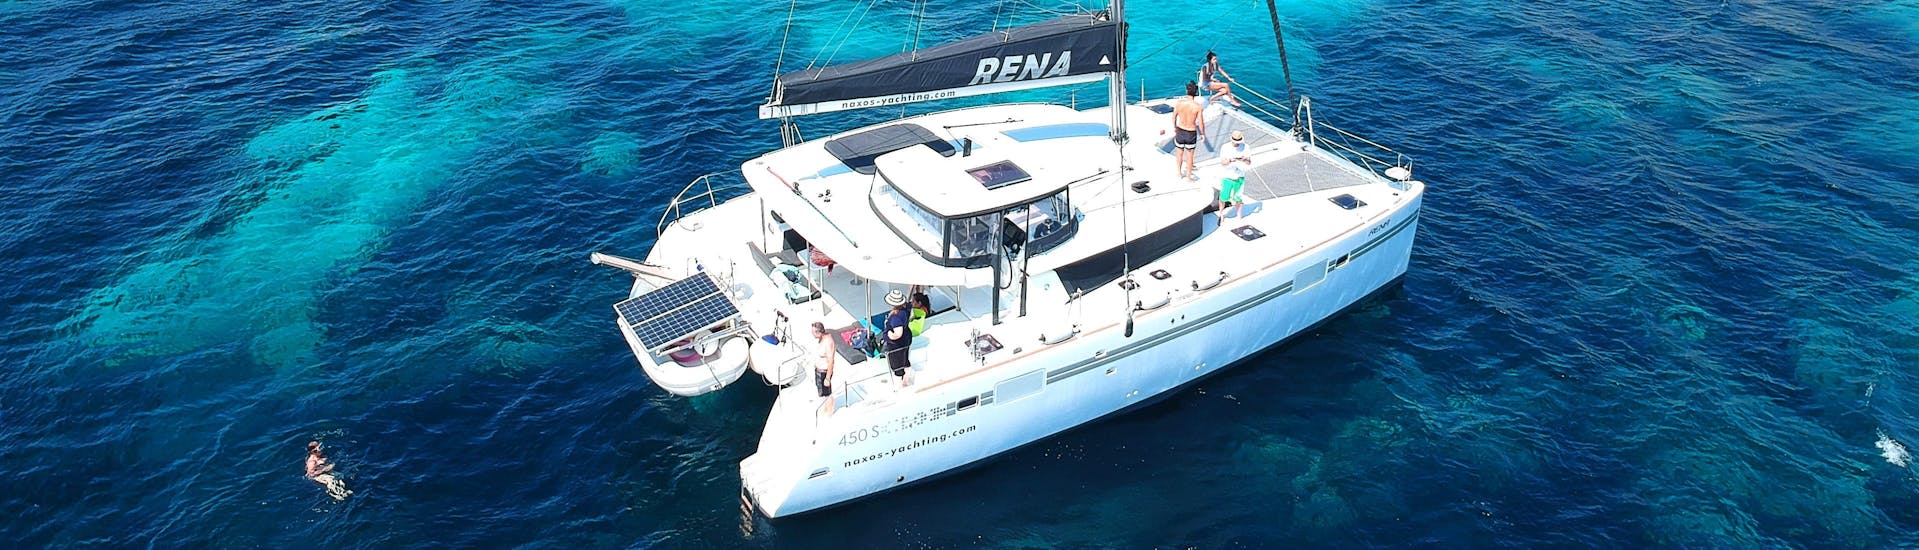 Balade luxueuse en catamaran depuis Naxos avec Snorkeling.